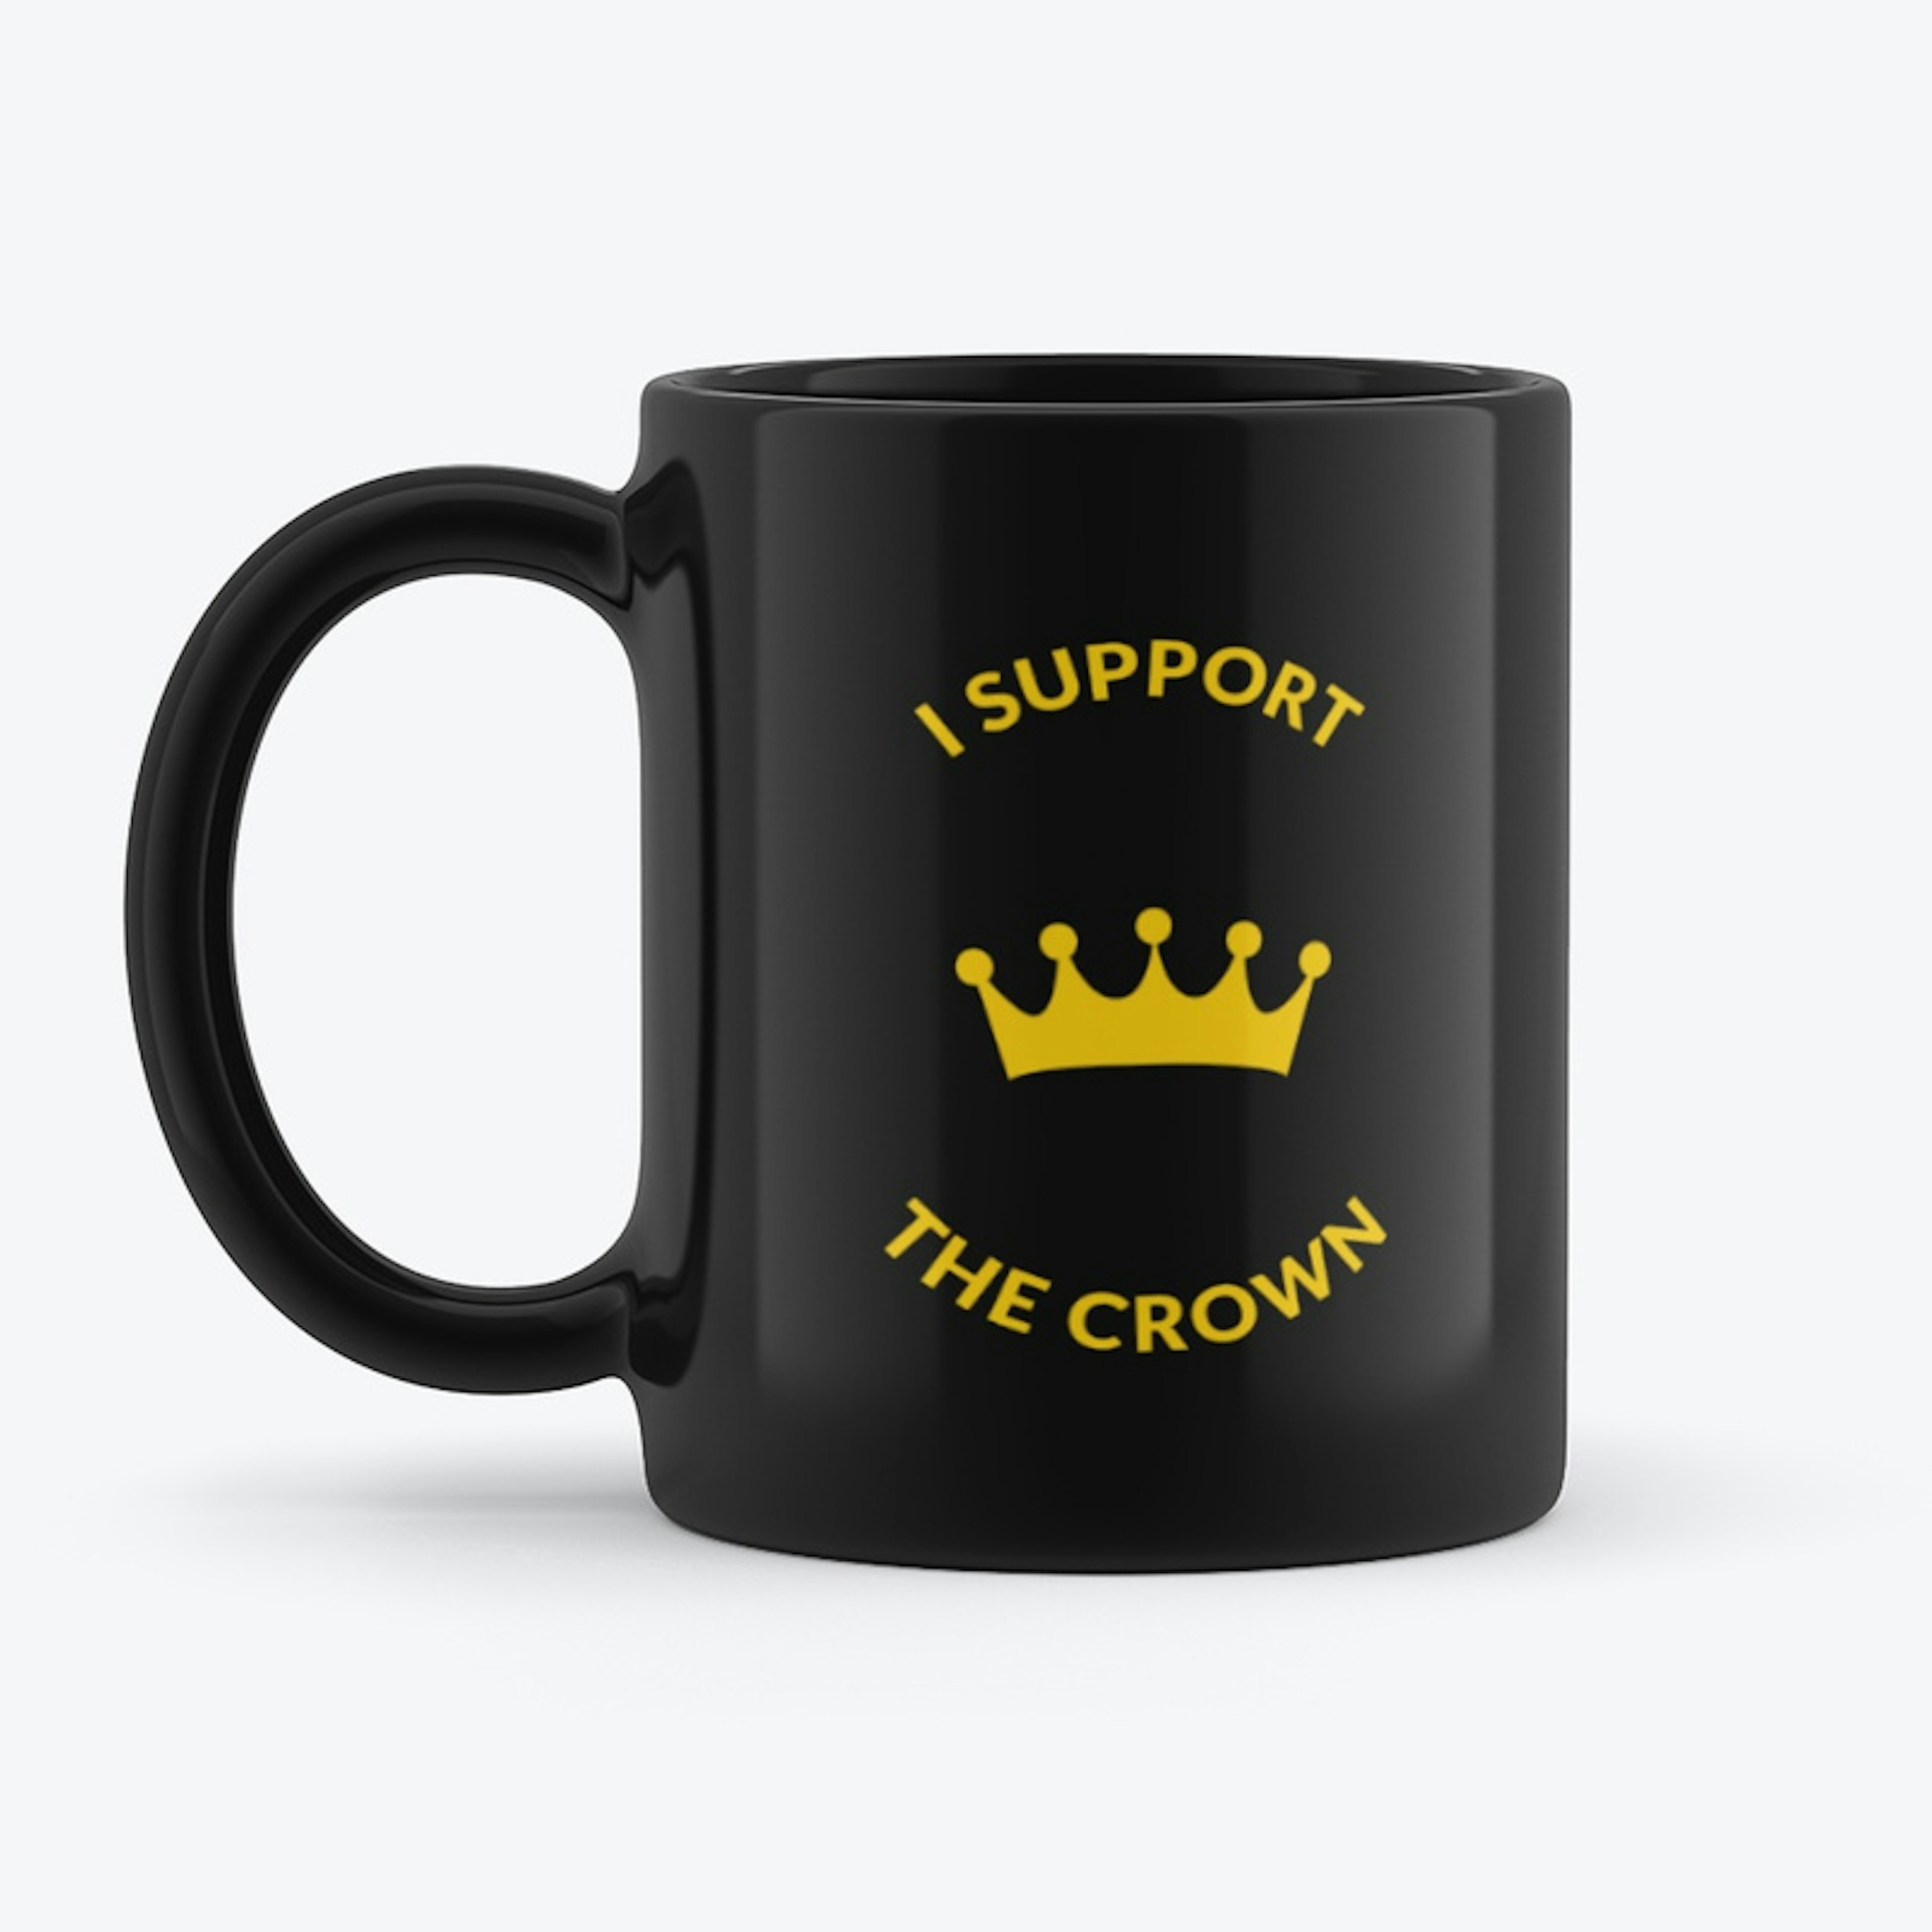 I SUPPORT THE CROWN mug